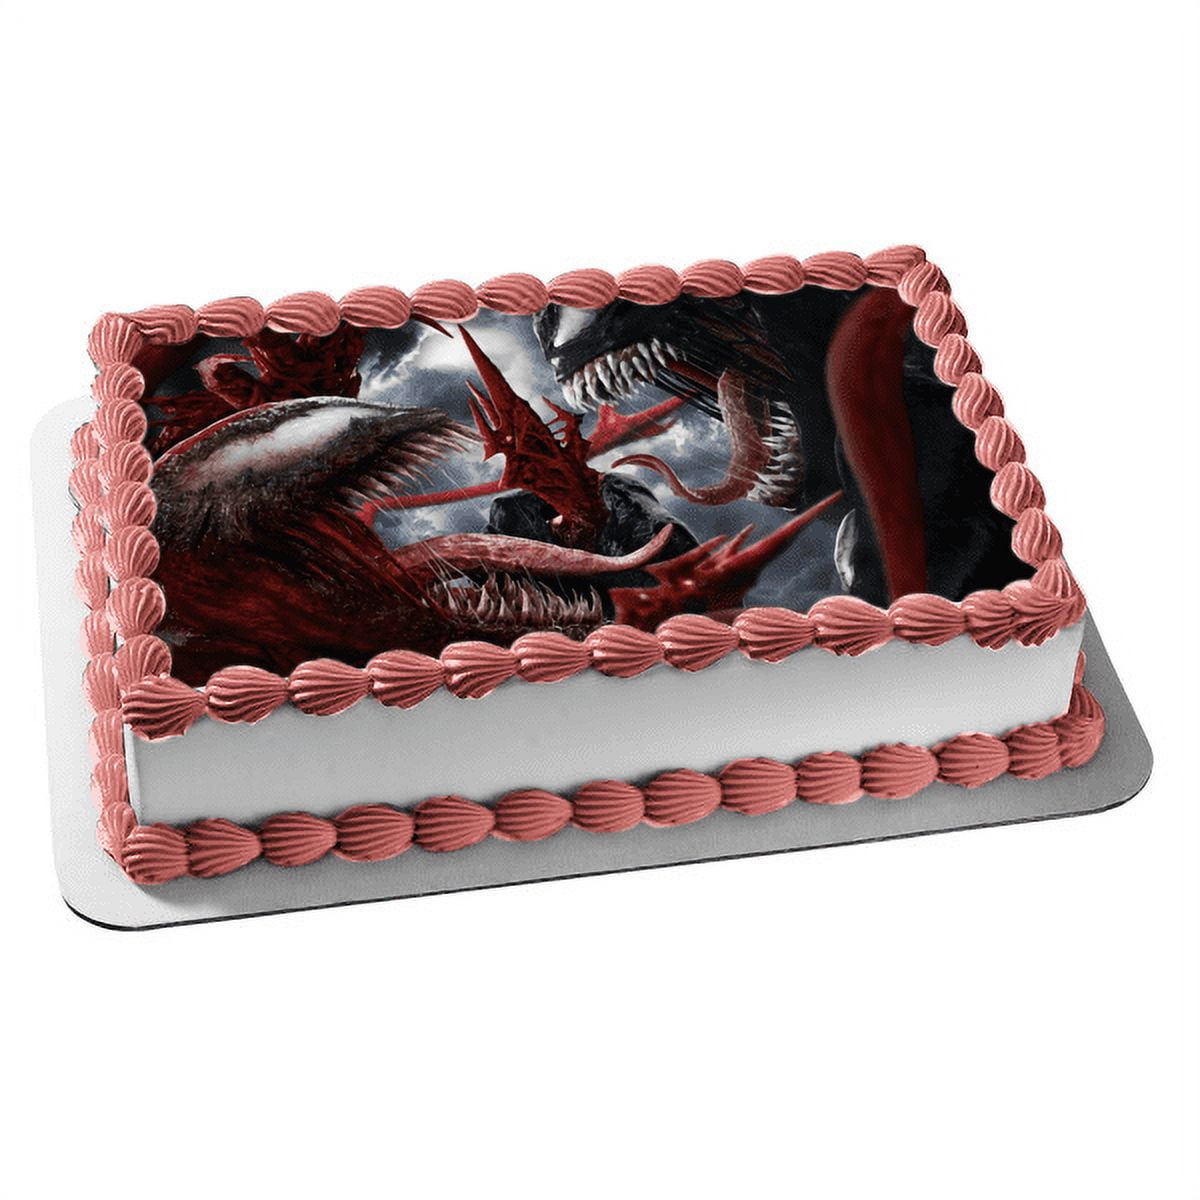 25 Best Venom Cake Ideas for Birthdays and Events